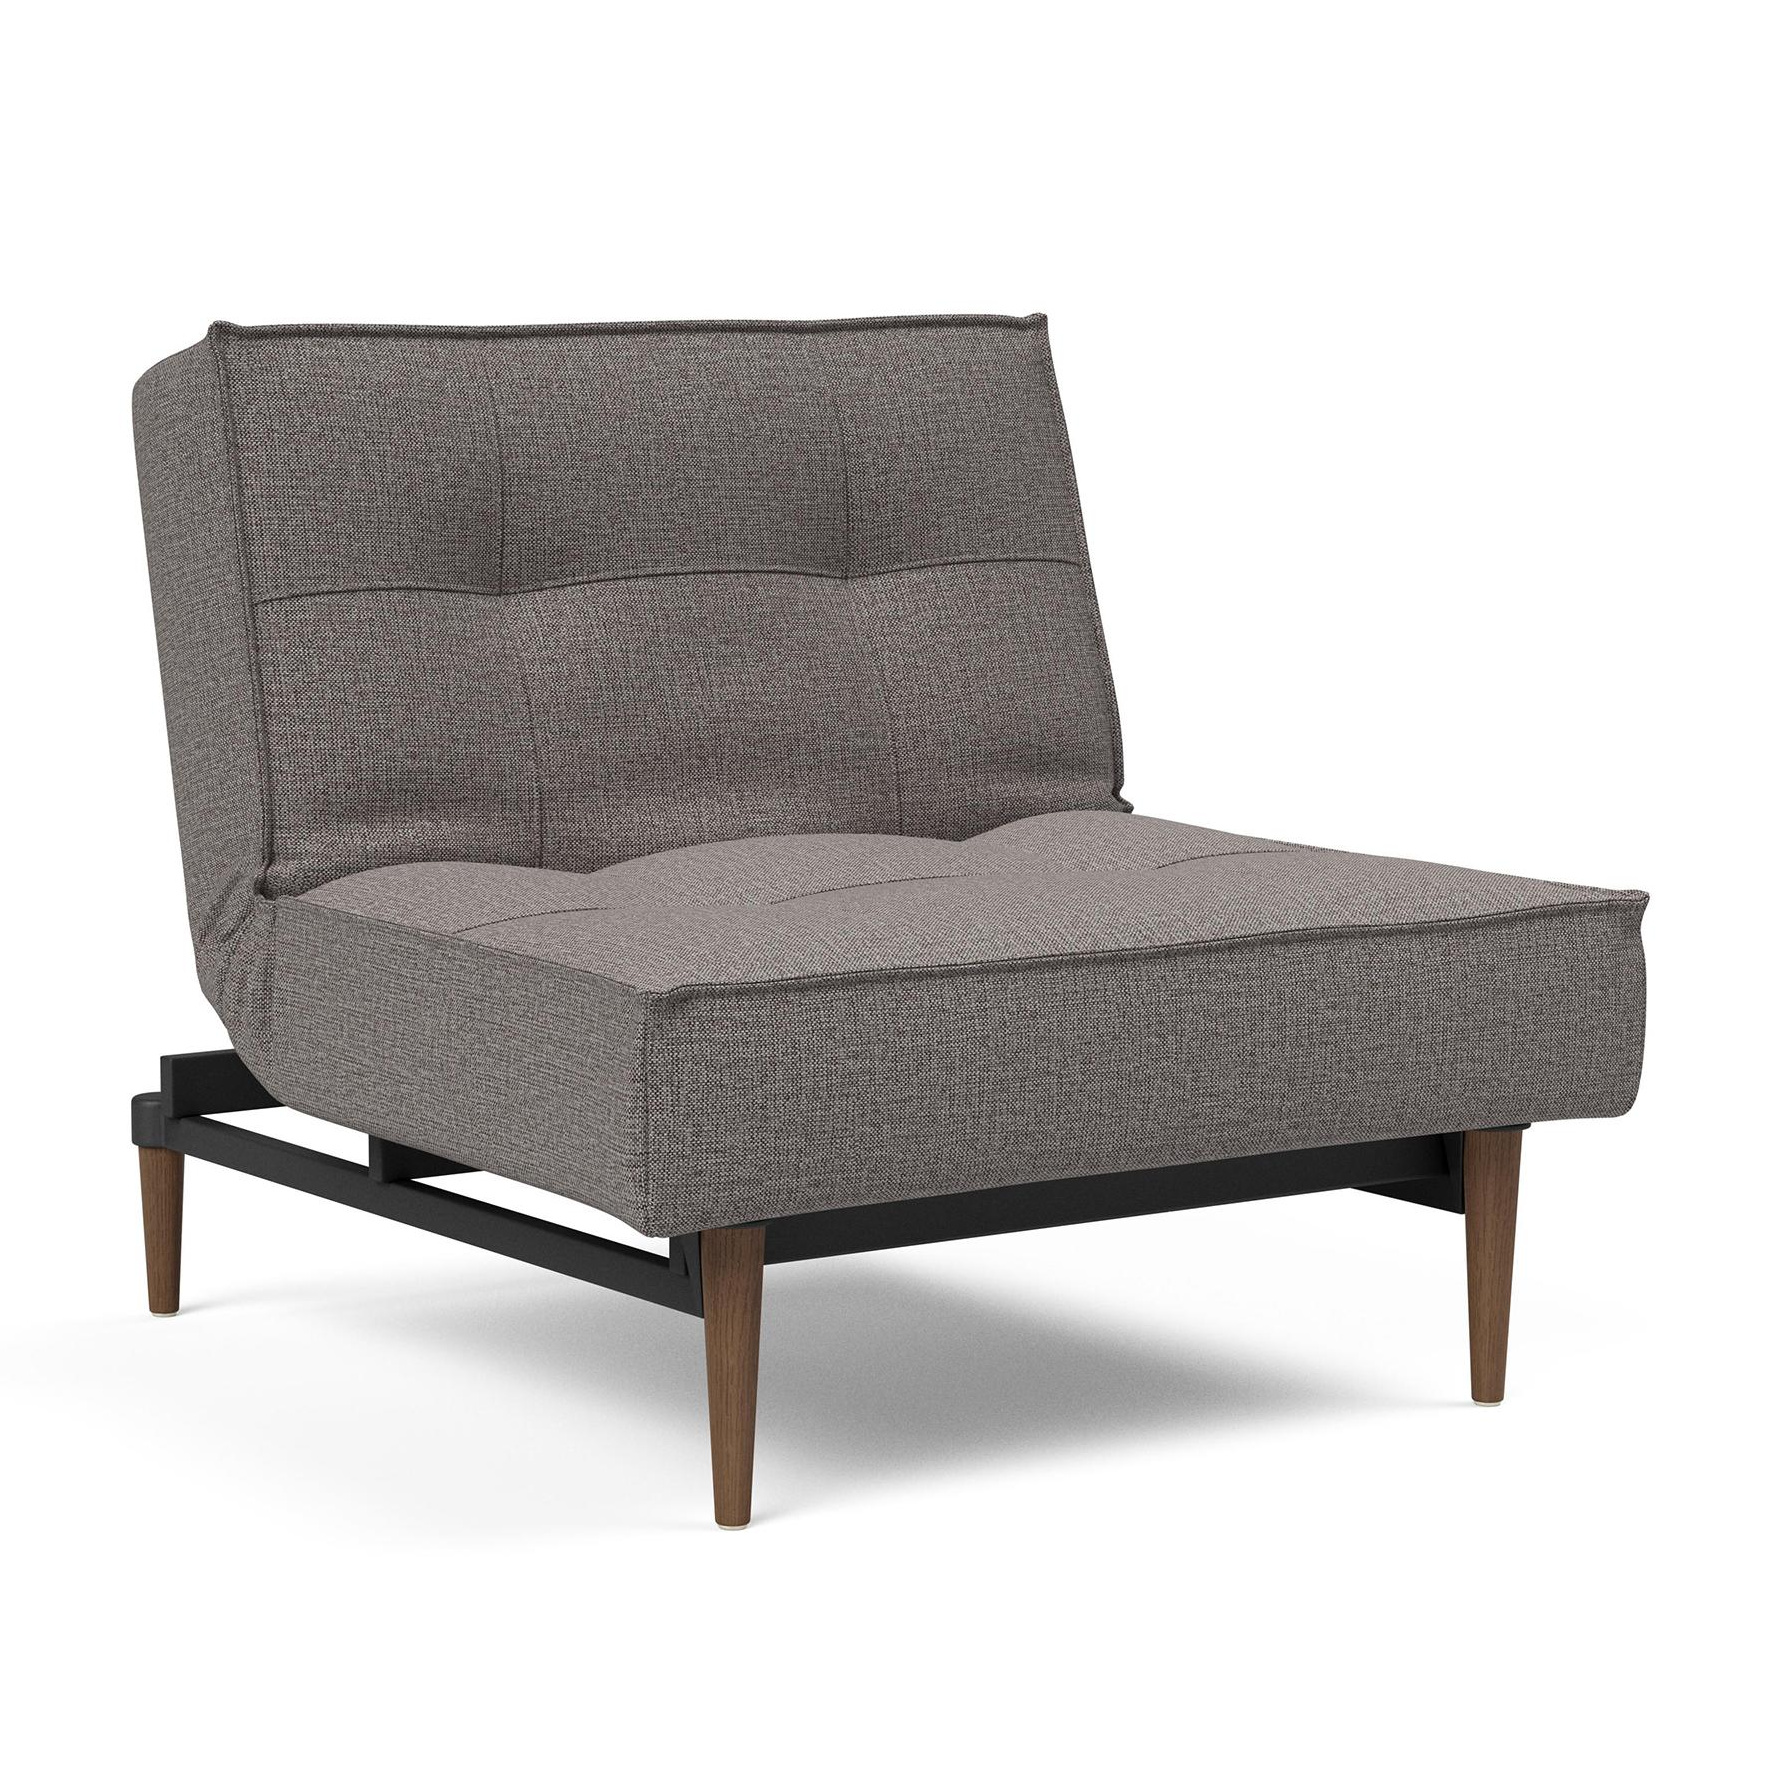 Innovation - Splitback Styletto fauteuil hout donker - grijs/stof 521 Mixed Dance Grey/onderstel staal zwart/voeten van donker hout